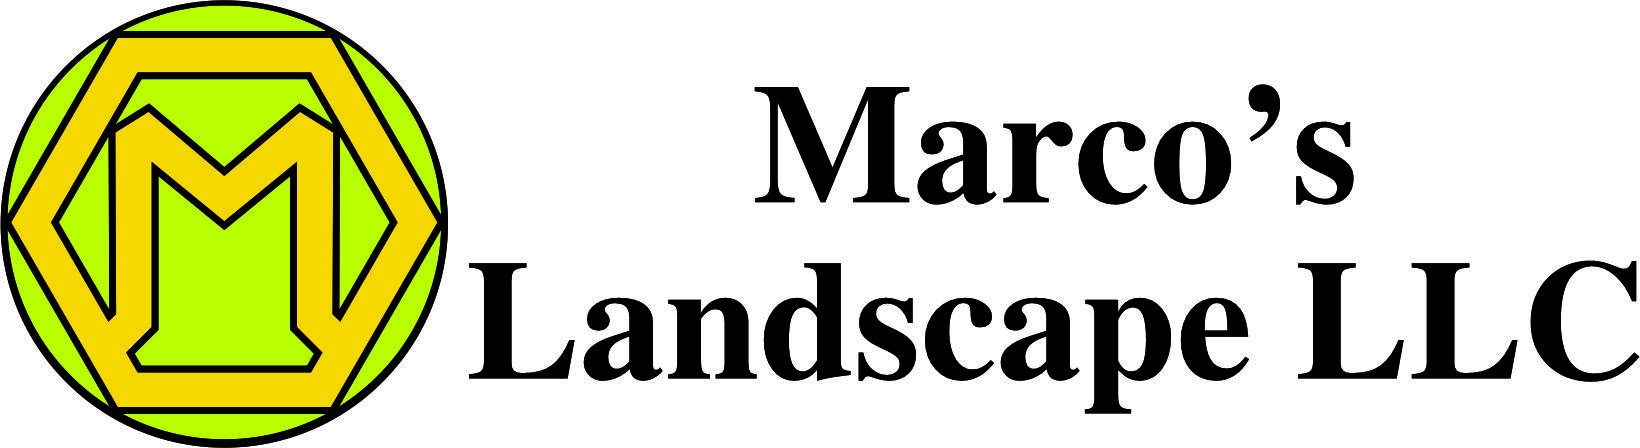 Marco's Landscape, LLC Logo